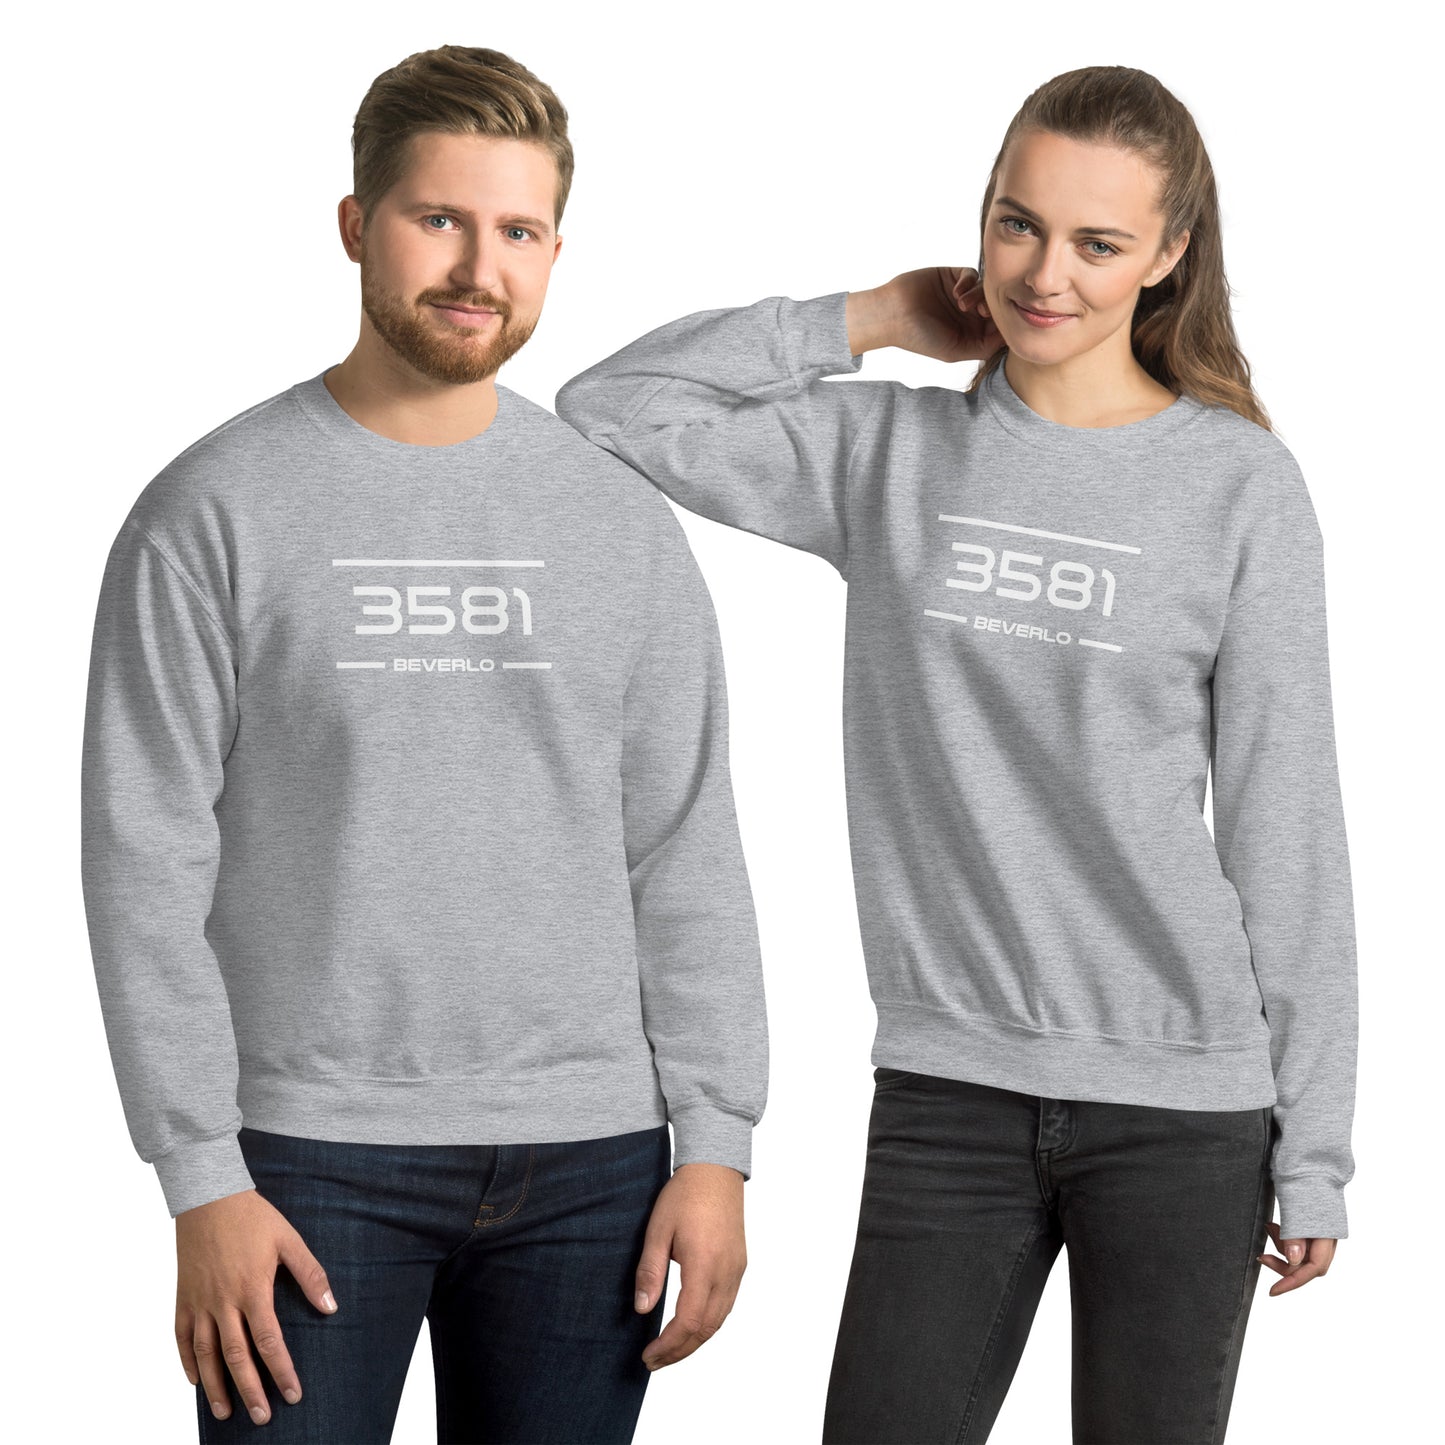 Sweater - 3581 - Beverlo (M/V)